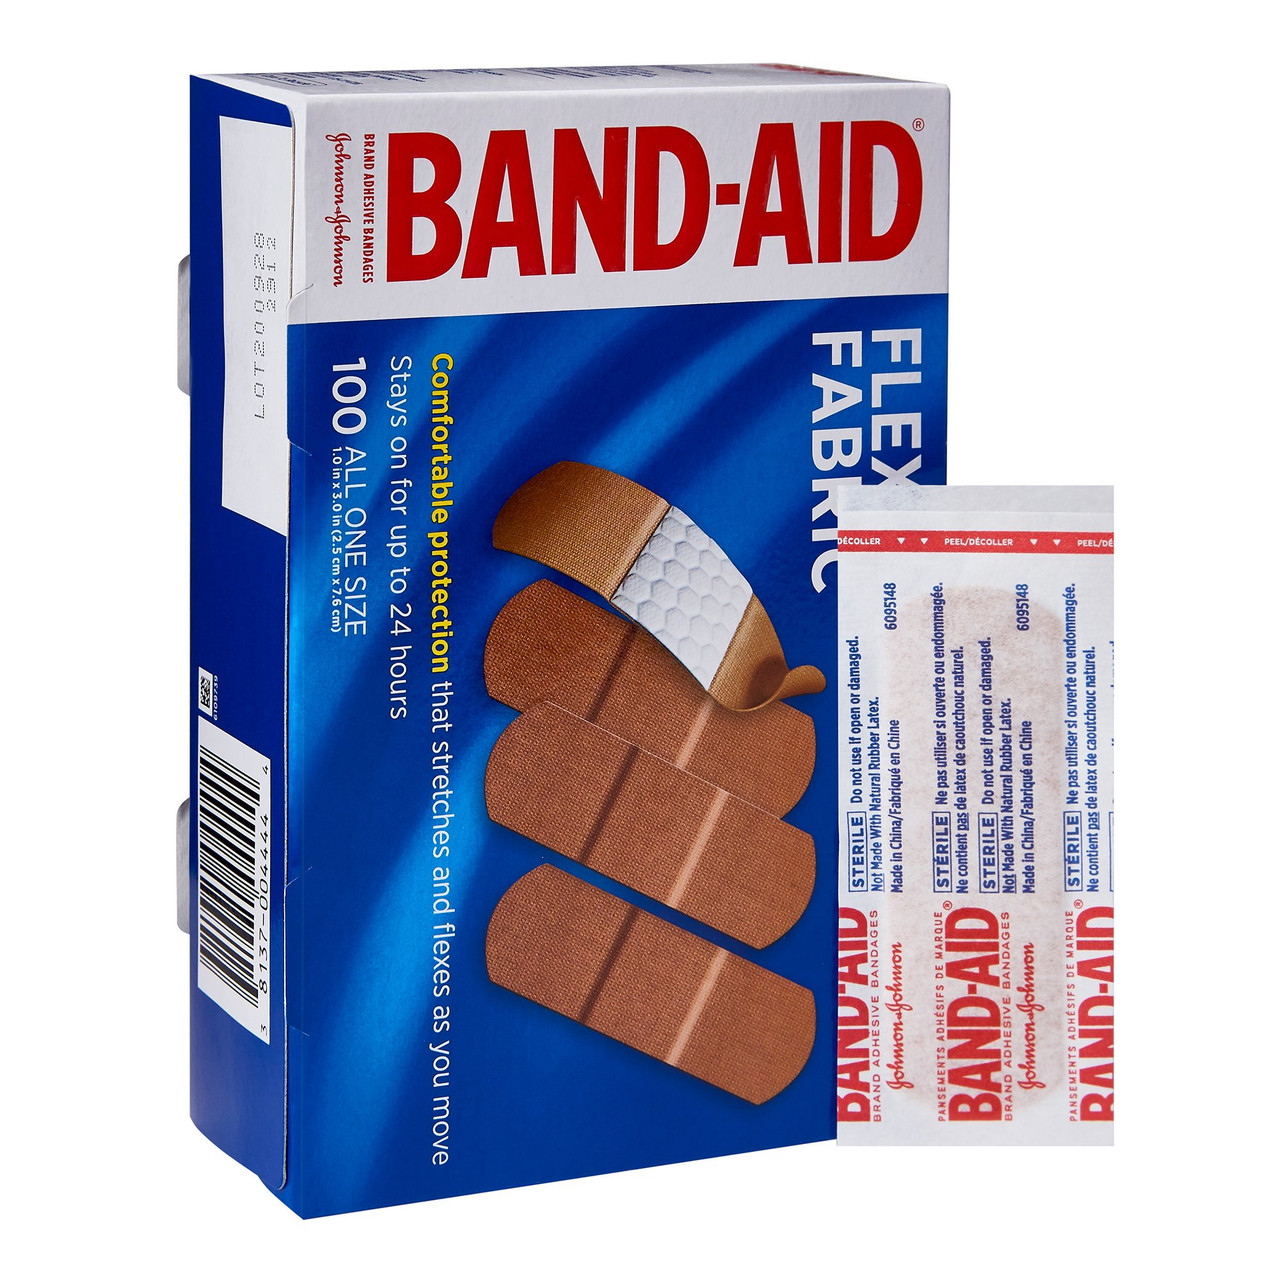 Band-Aid Adhesive Strip - Sterile, Flexible Fabric Bandage